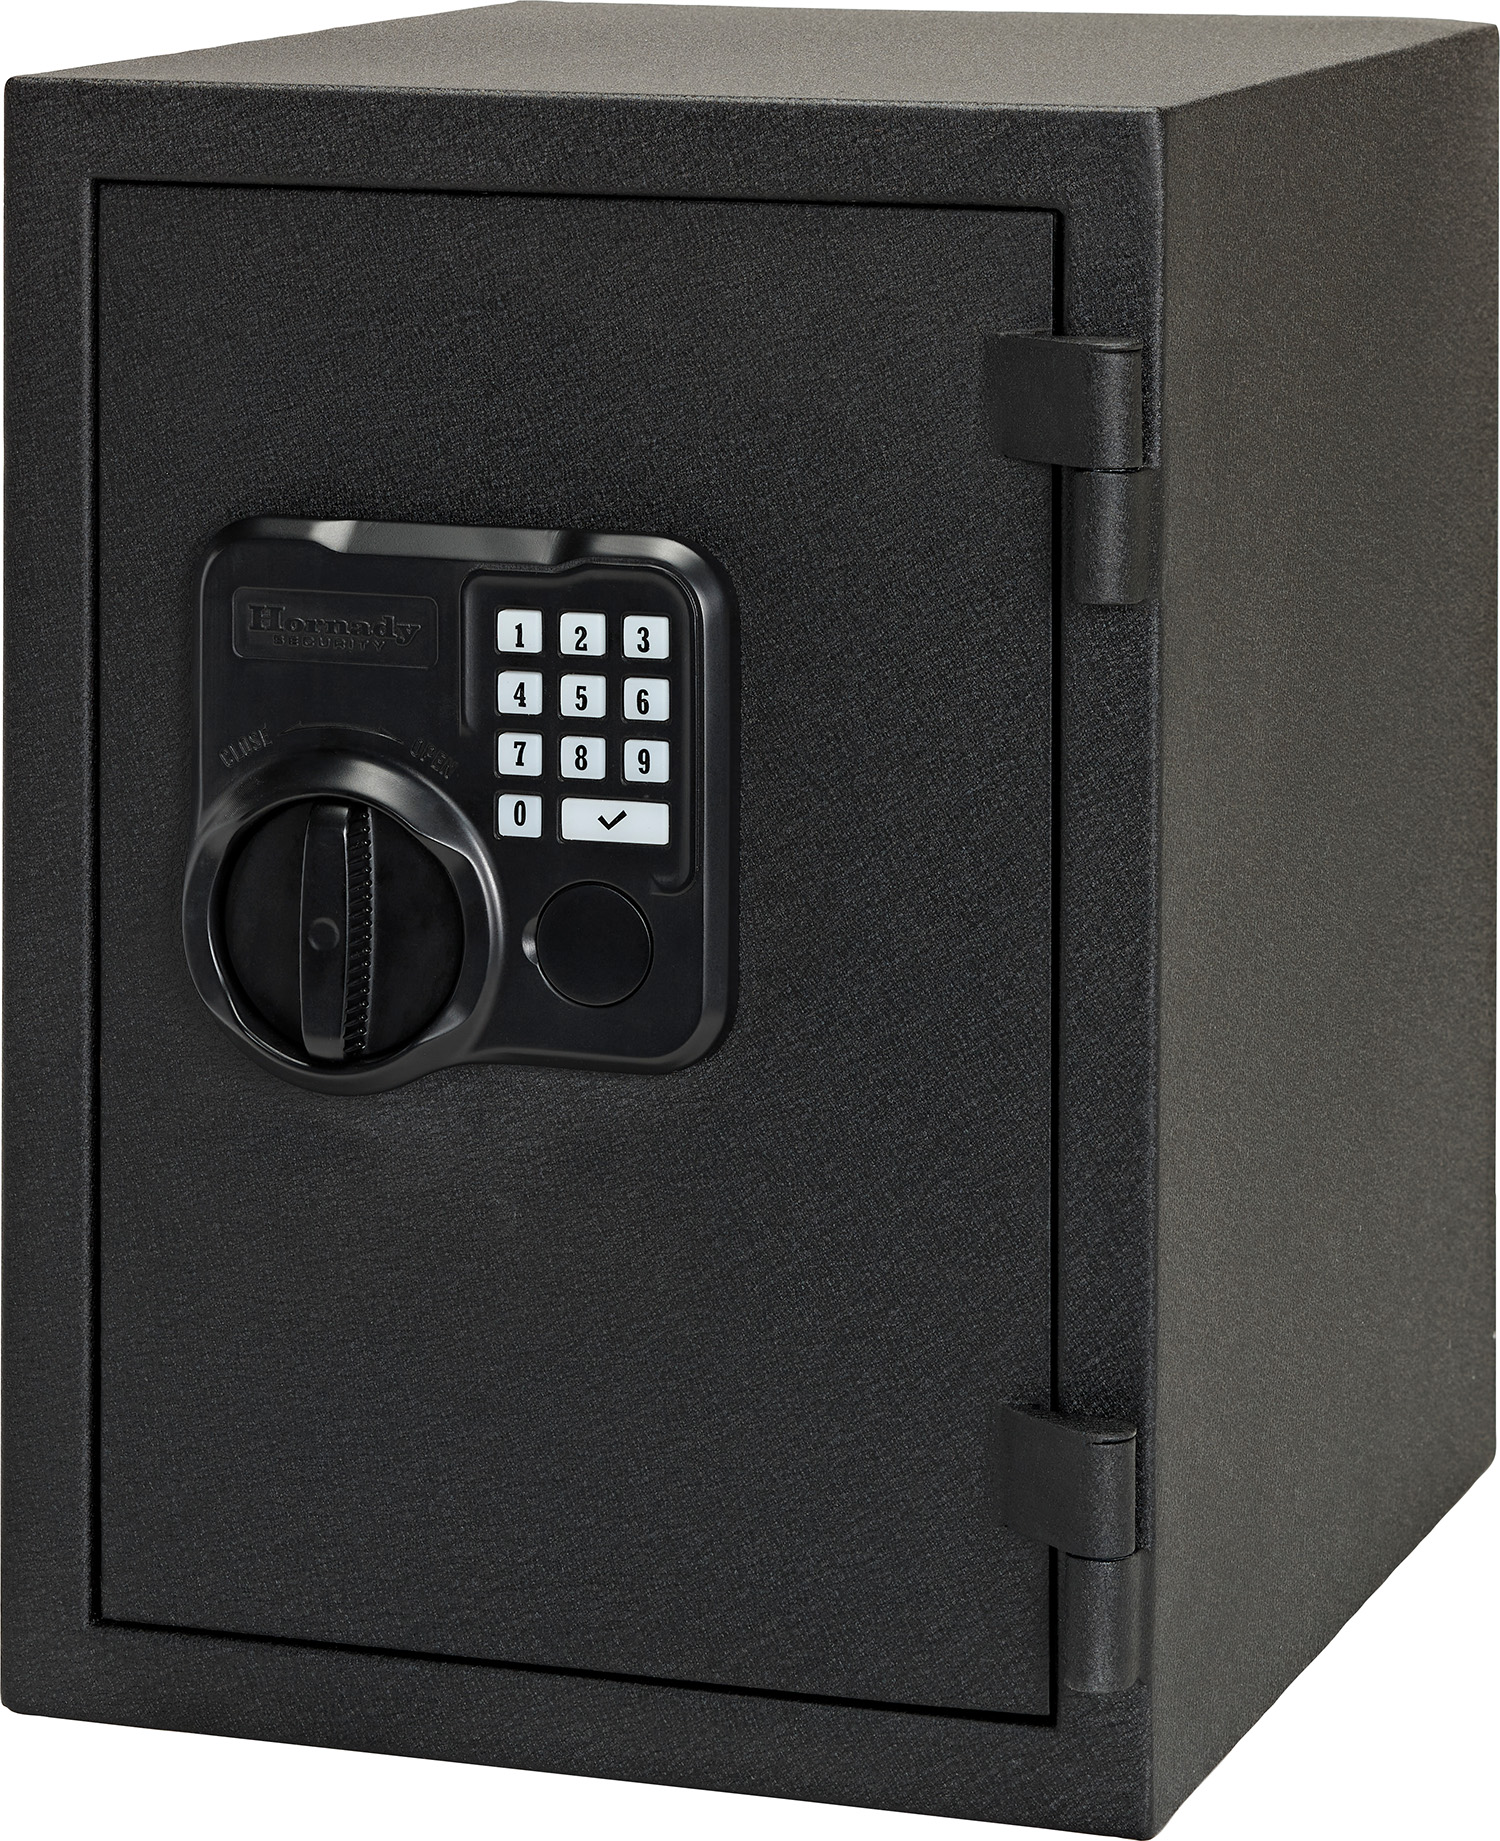 Hornady 95407 Fireproof Safe  Keypad/Key Entry Black Powder Coat Black Holds 2 Handguns Steel